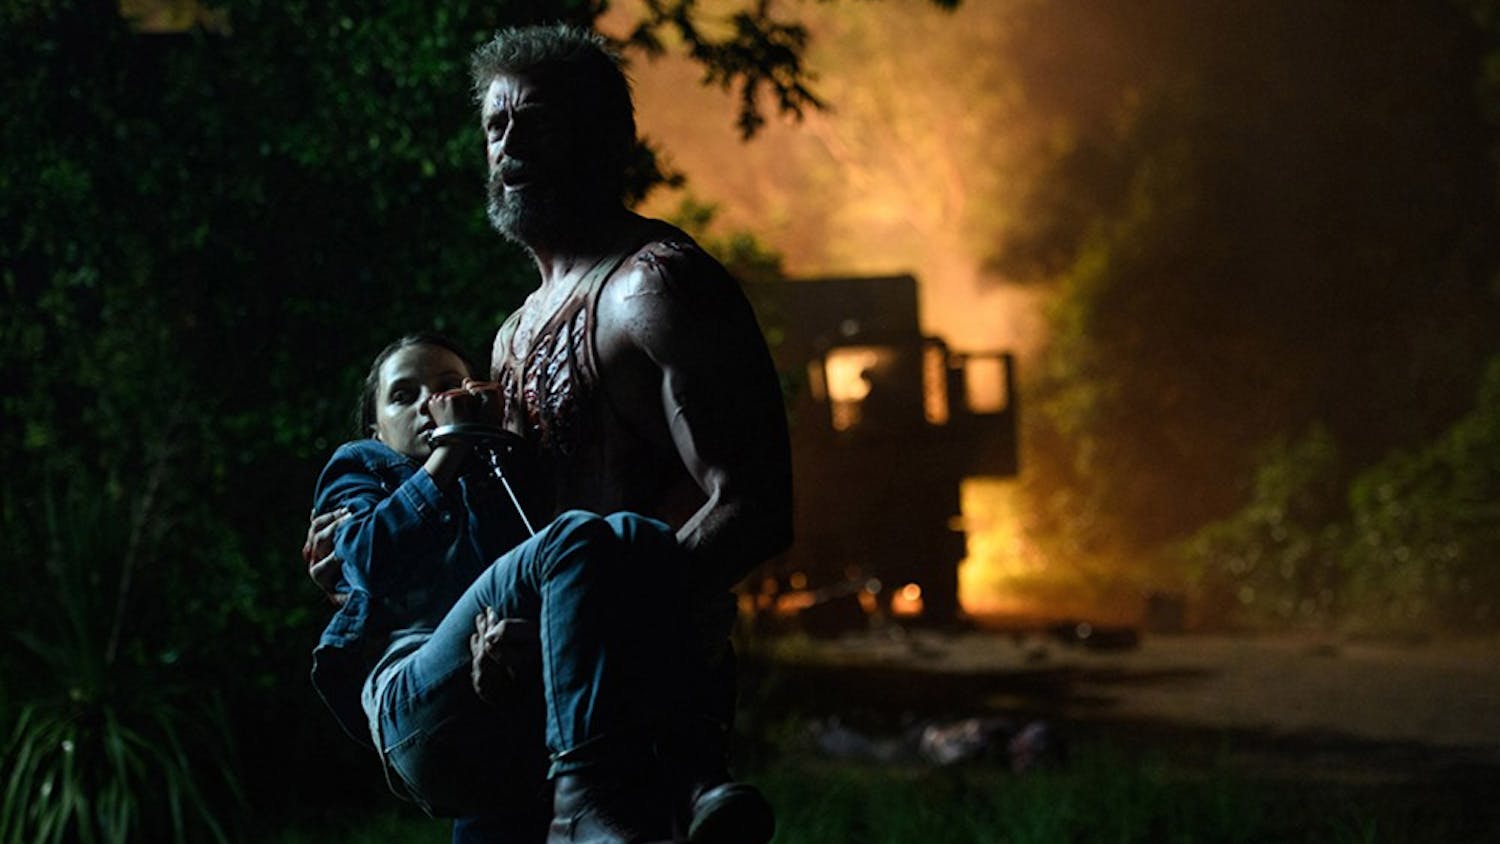 Logan/Wolverine (Hugh Jackman) tries to protect the young mutant Laura (Dafne Keen) in "Logan." (Ben Rothstein/20th Century Fox) 